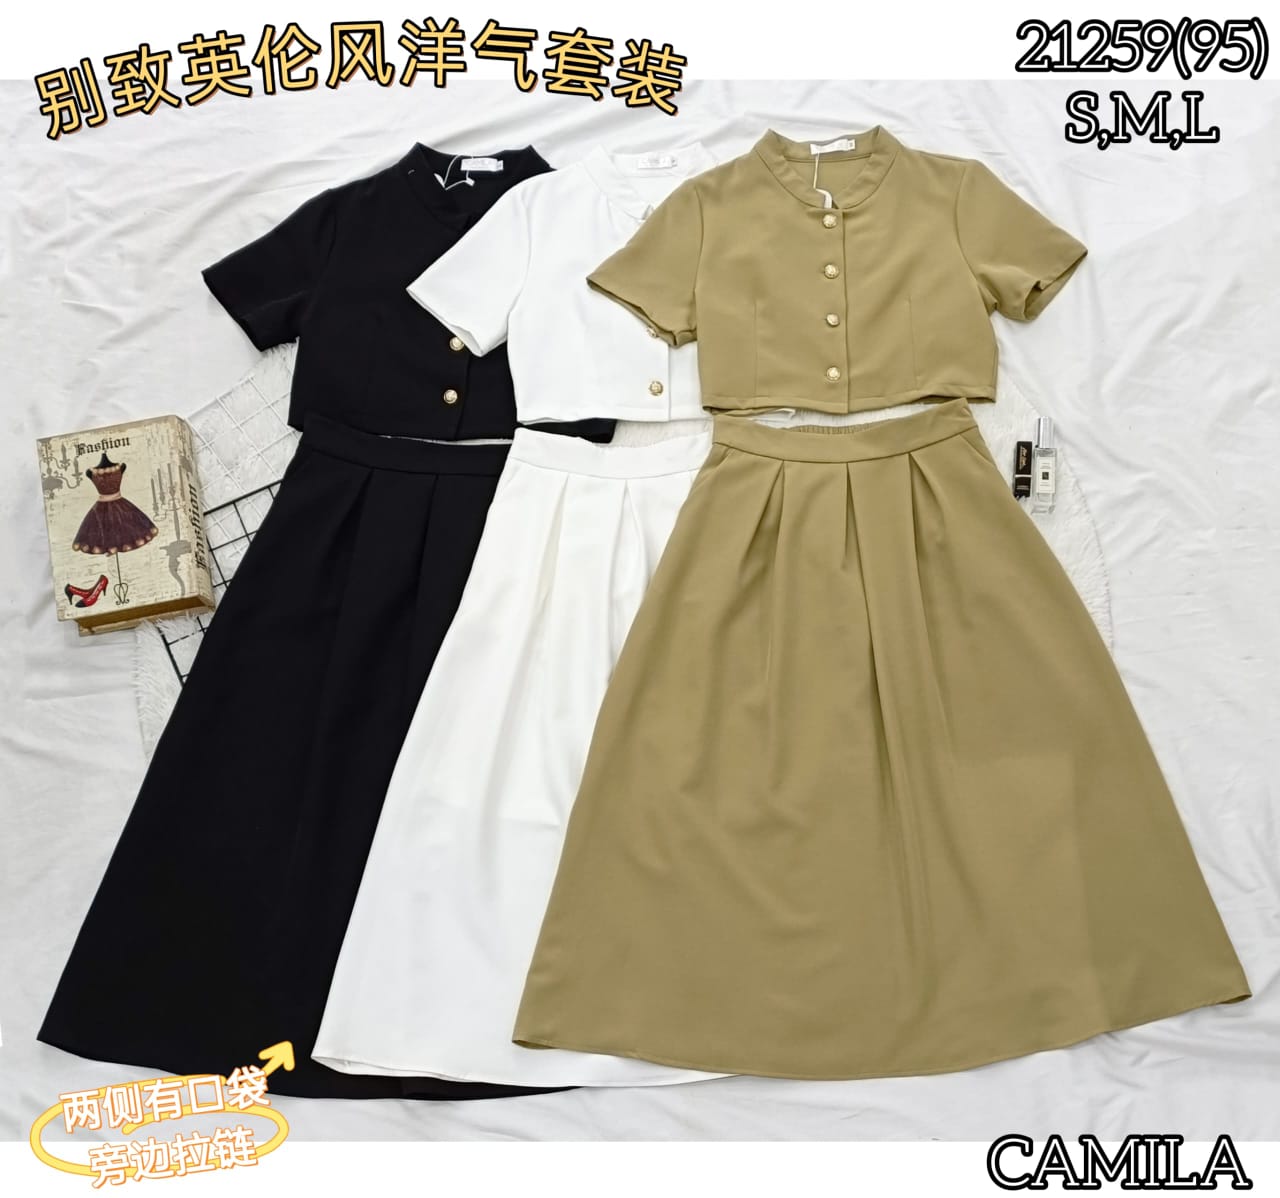 【SS16057】两件式西装英伦风韩式套装 短袖宽松短版上衣➕韩版高腰裙子，有口袋 ❤️❤️